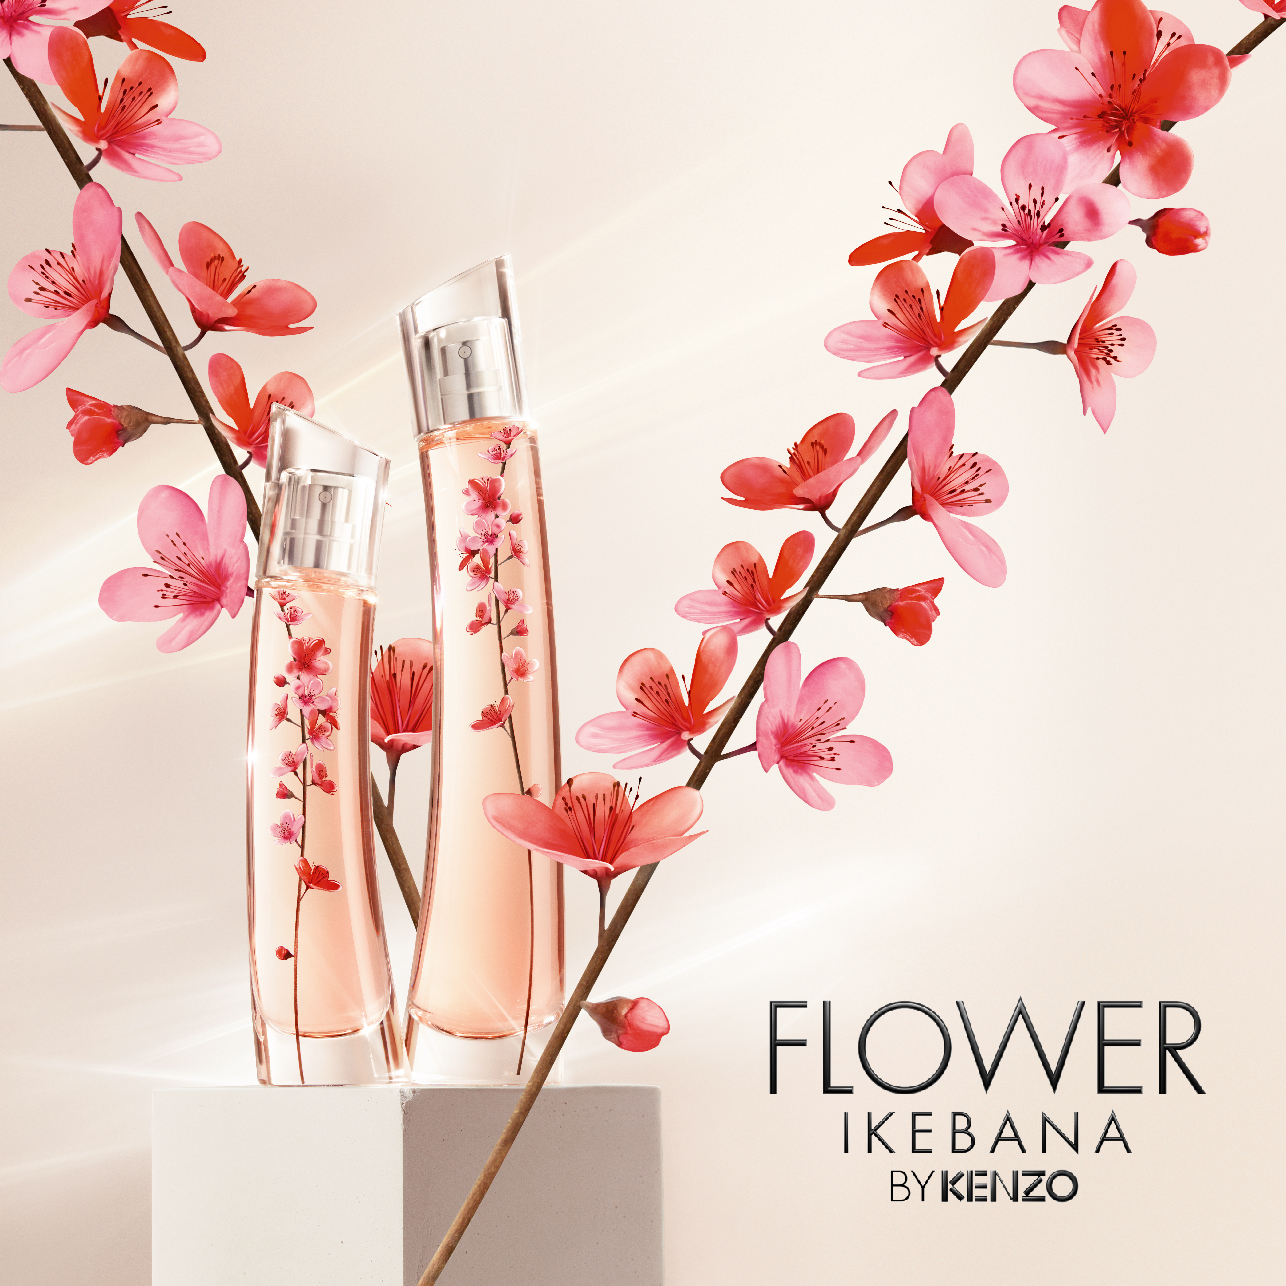 El arte floral japonés que inspiró a Kenzo